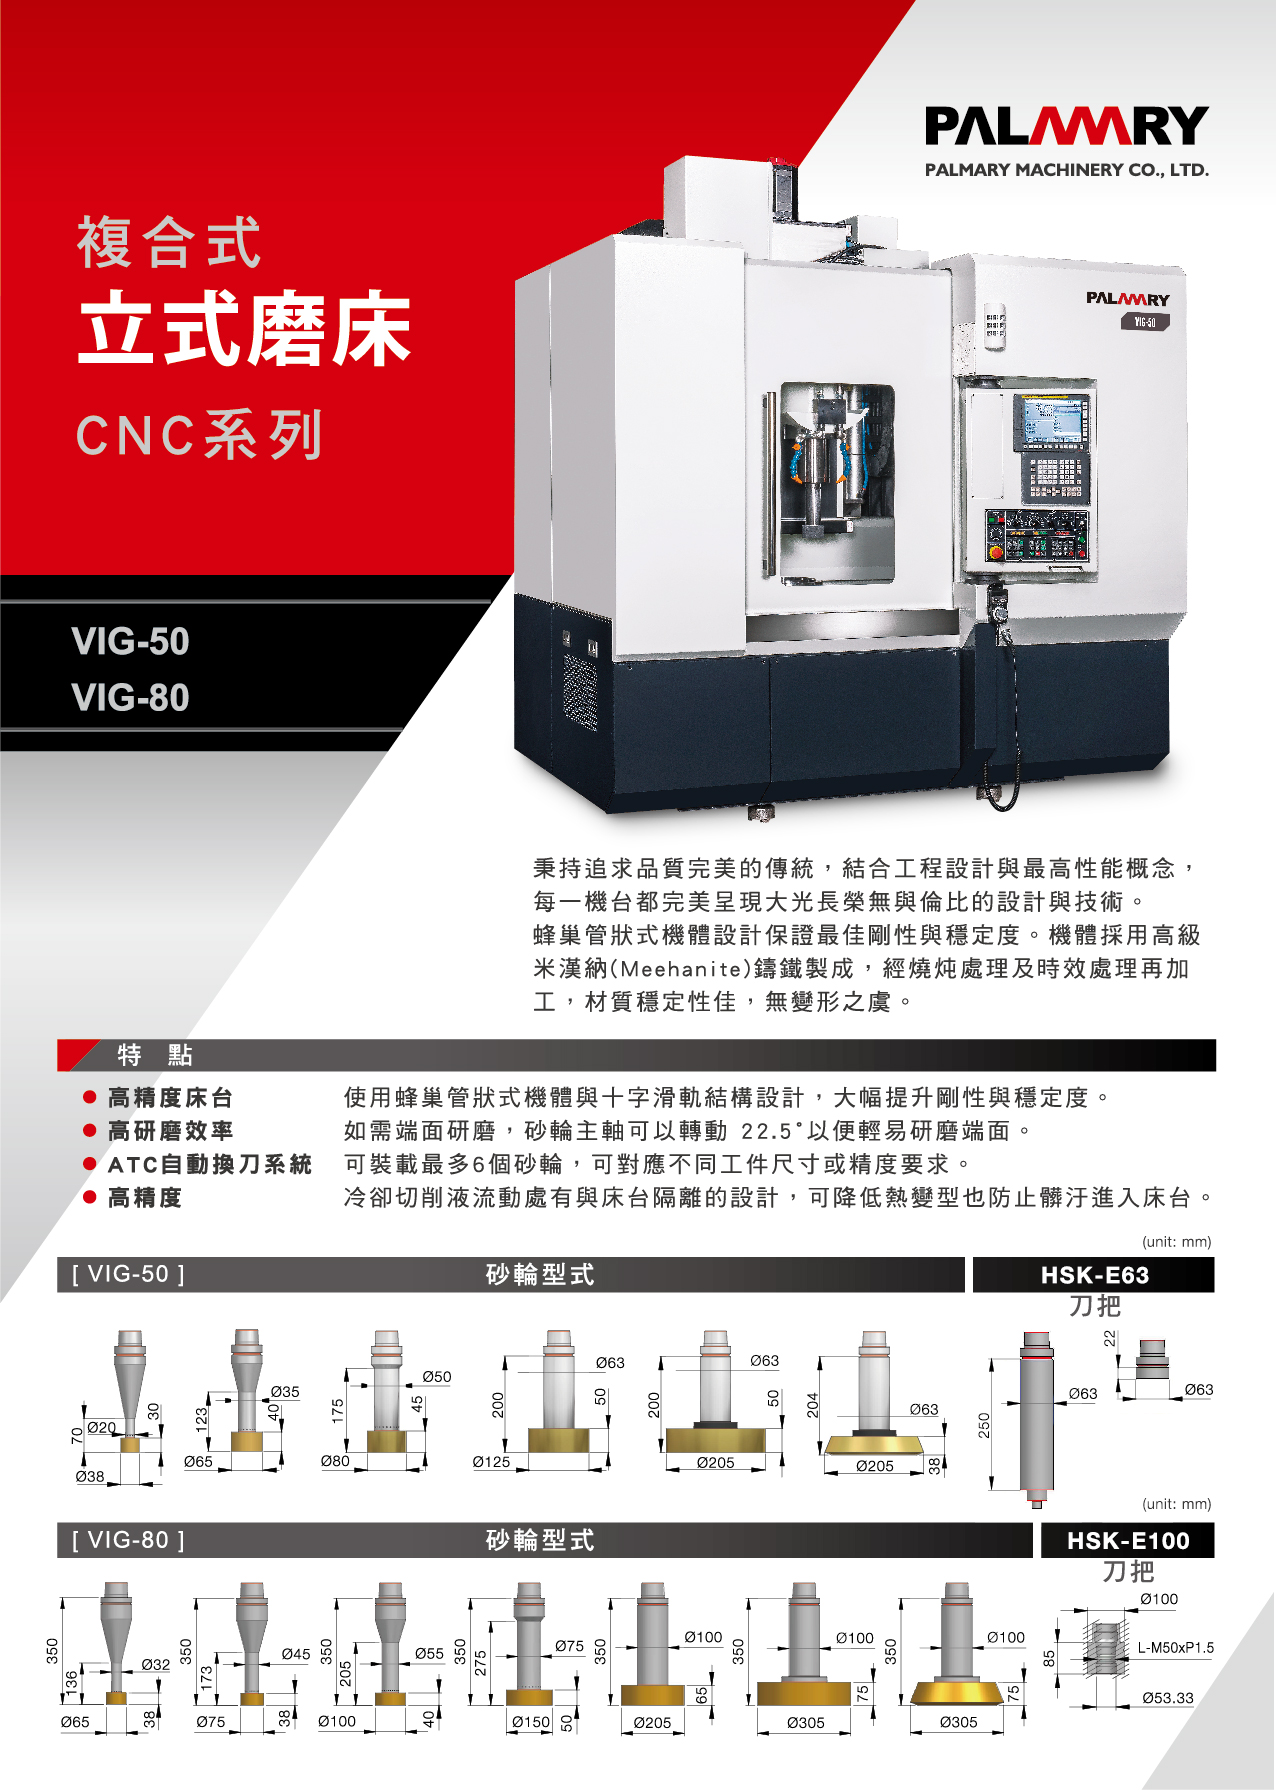 CNC 立式磨床 VIG-50